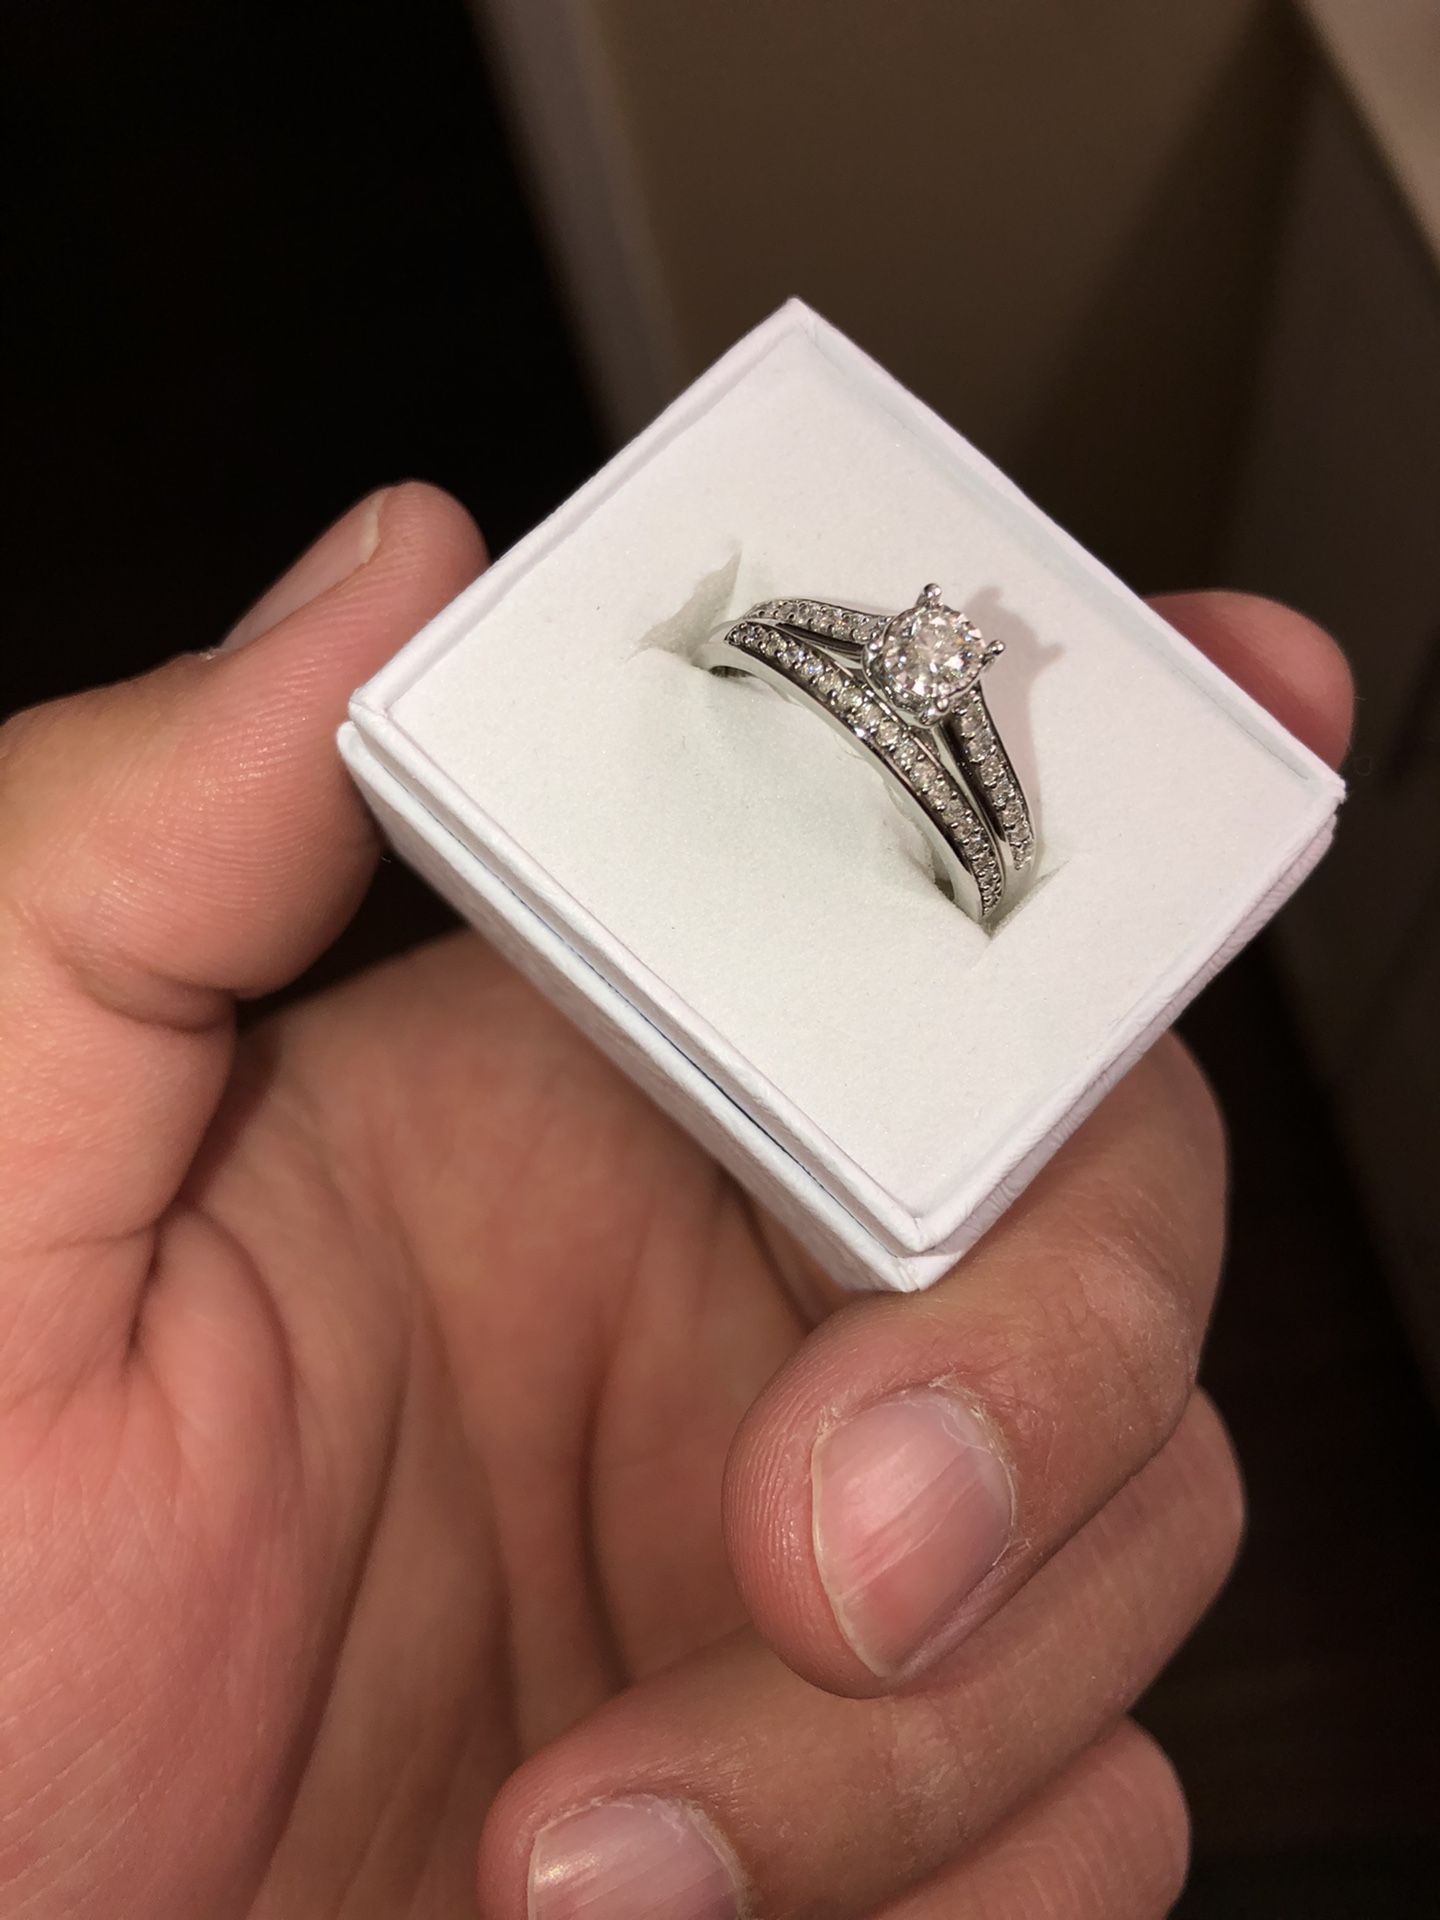 1/2 ct diamond weight, white gold wedding ring set, size 8